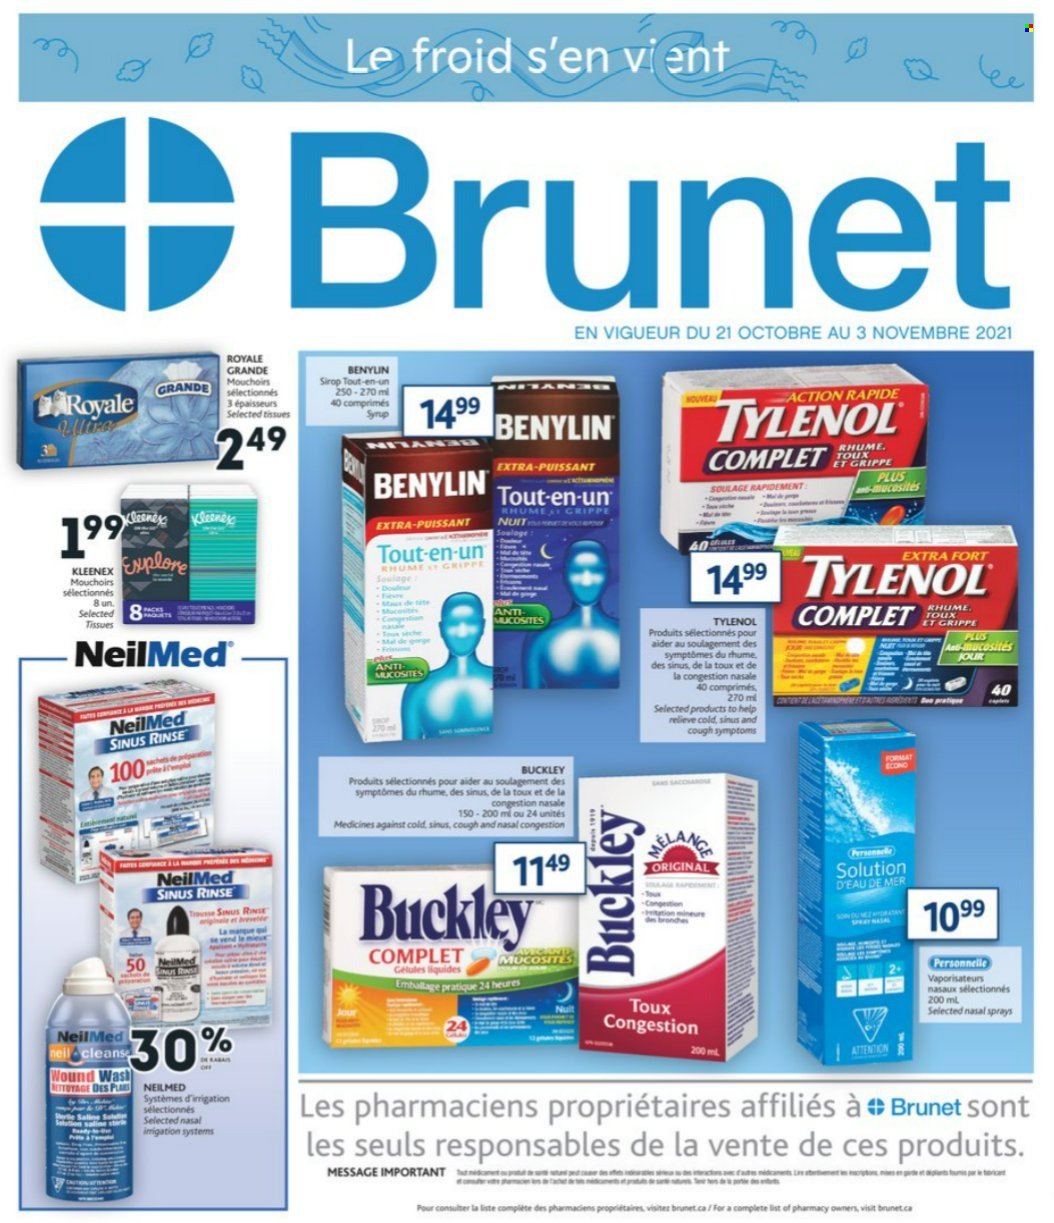 thumbnail - Brunet Flyer - October 21, 2021 - November 03, 2021 - Sales products - Kleenex, tissues, Tylenol, Benylin. Page 1.